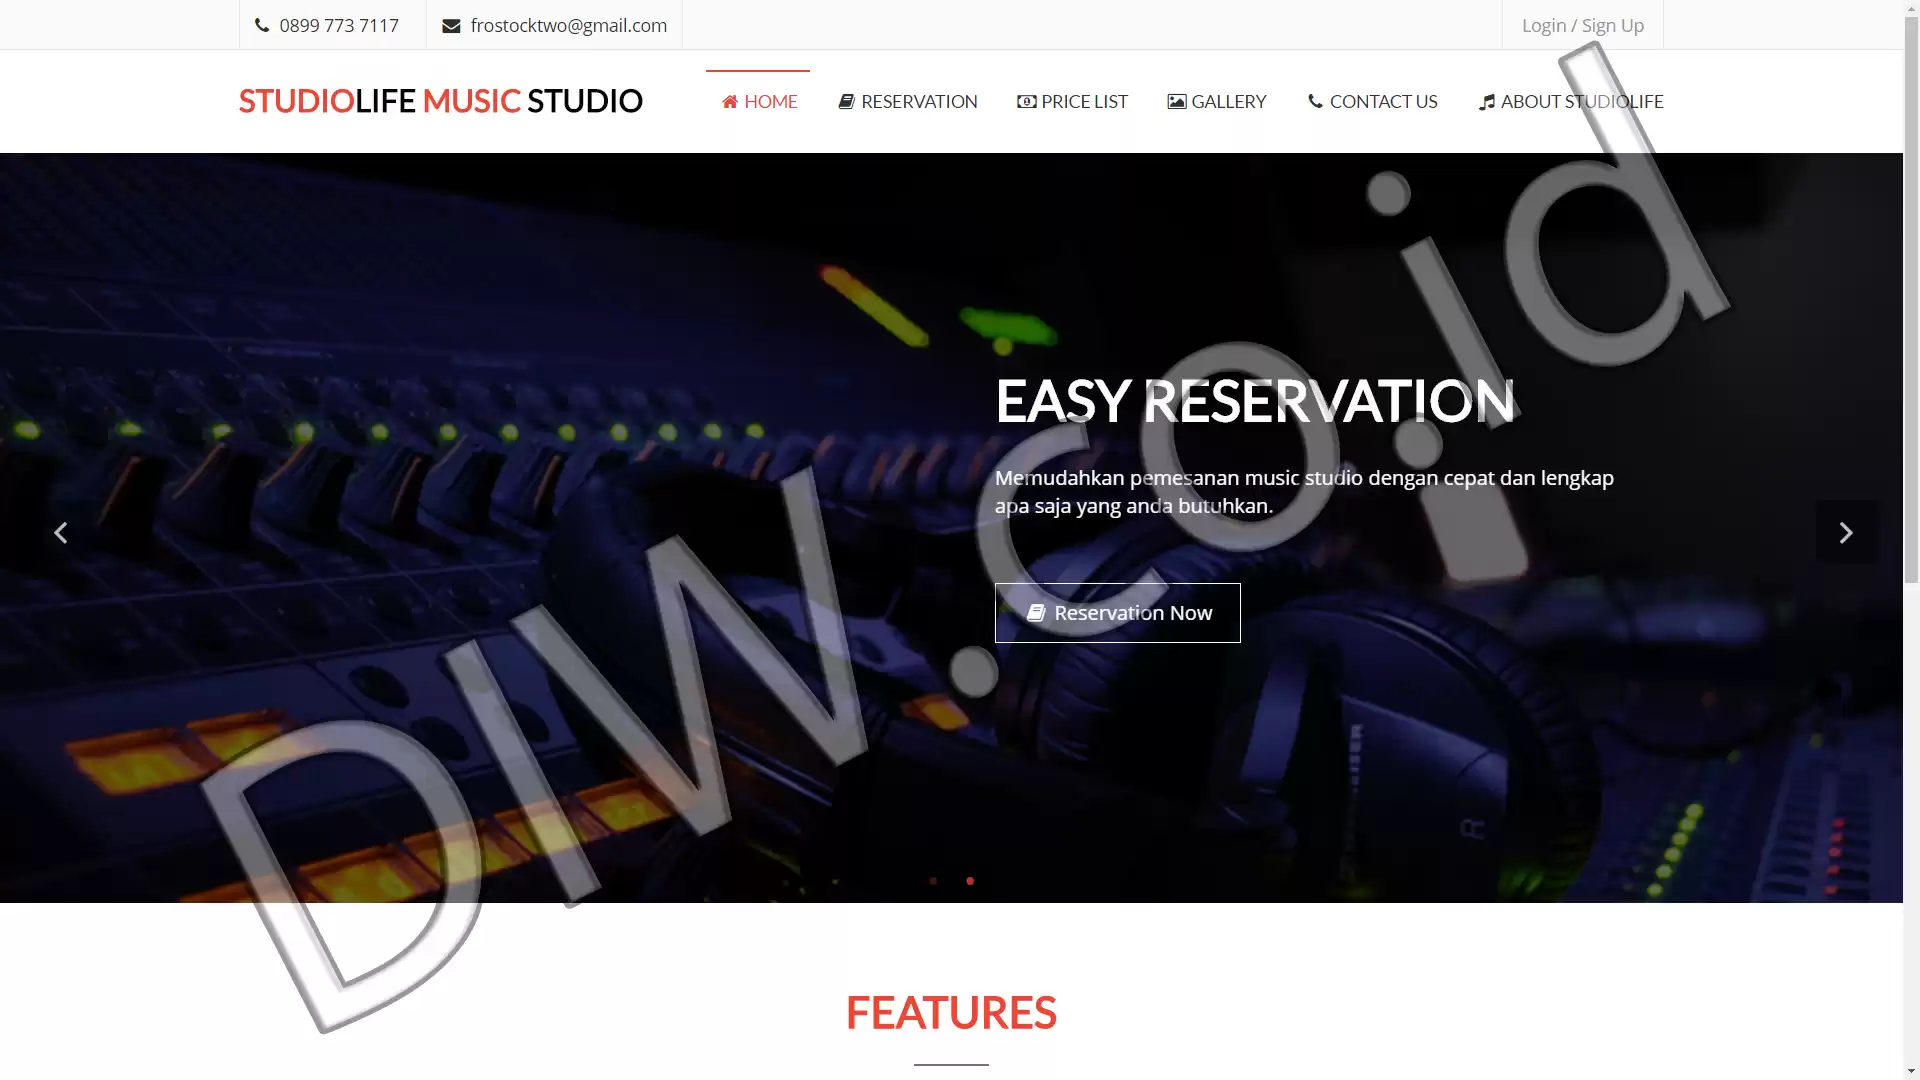 Portfolio - Studiolife Music Studio - DIW.co.id (Digital In Website) Jasa Pembuatan Website dan Program Skripsi